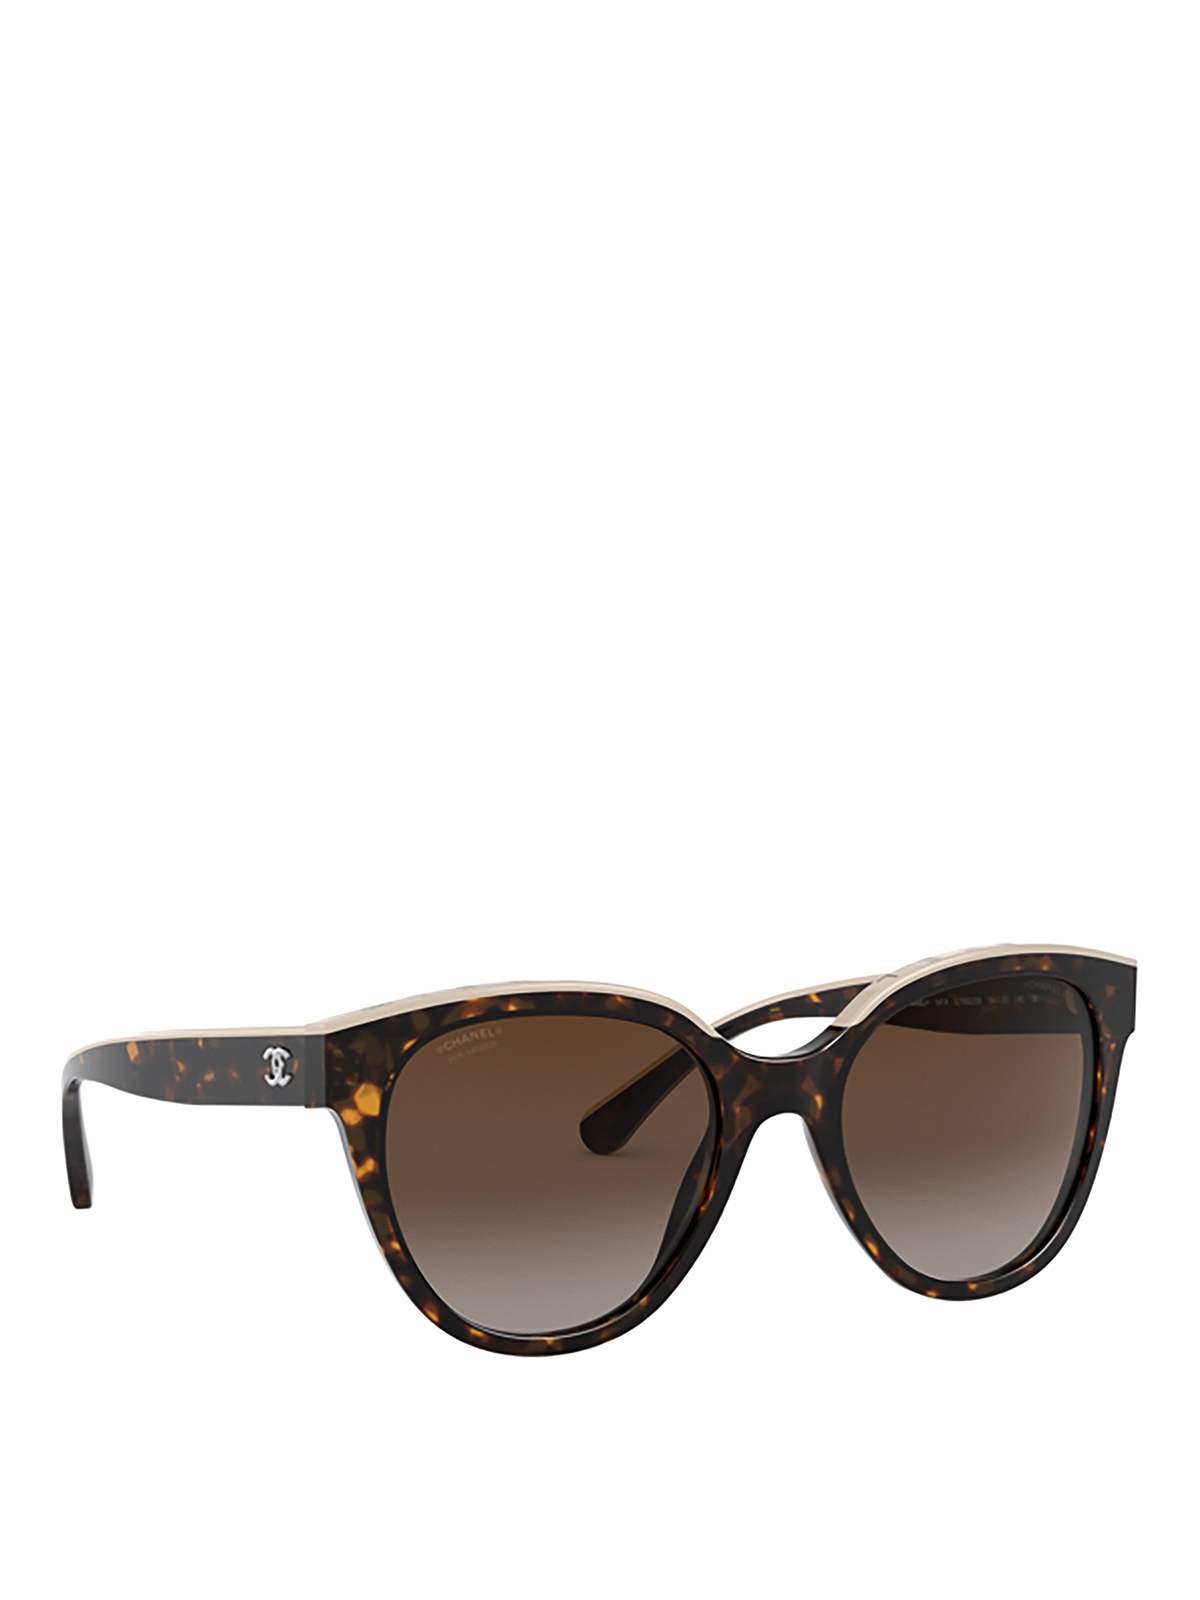 Sunglasses Chanel - Round lens acetate sunglasses - CH54141682S9